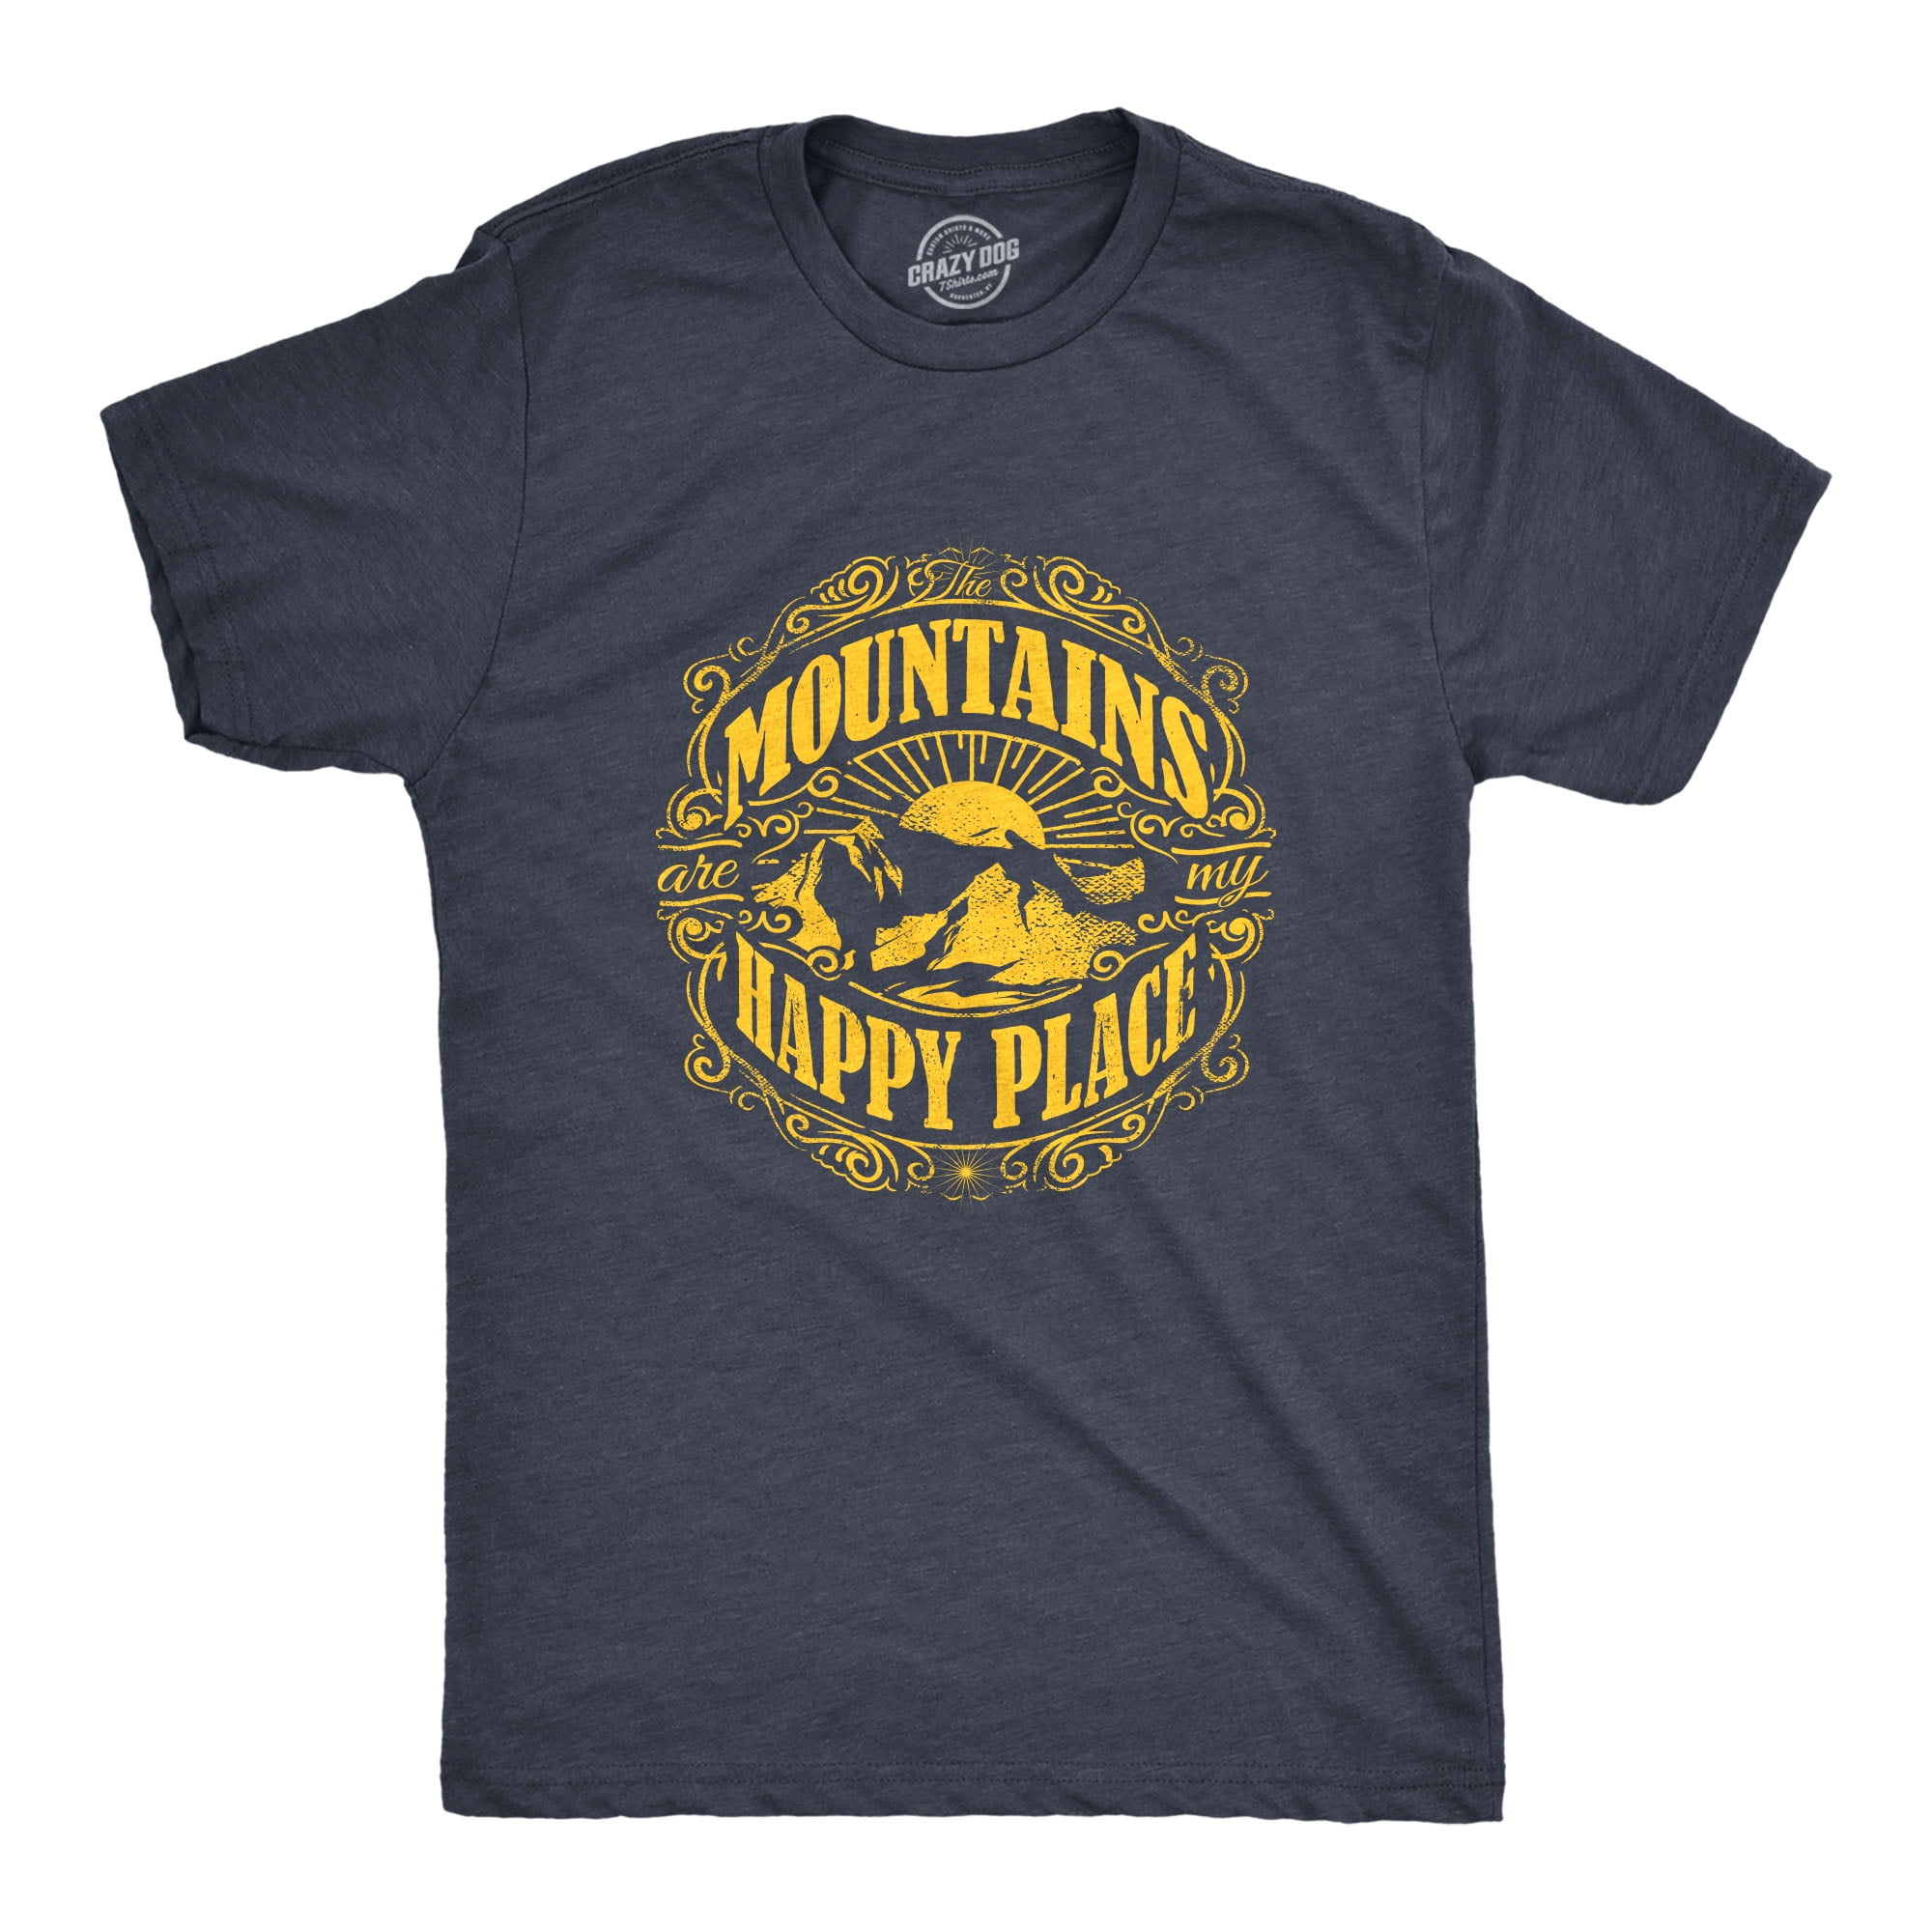 adventurer gift wilderness graphic tee mountains t shirt nature lover shirt outdoor shirt Mountain themed t shirt nature clothing